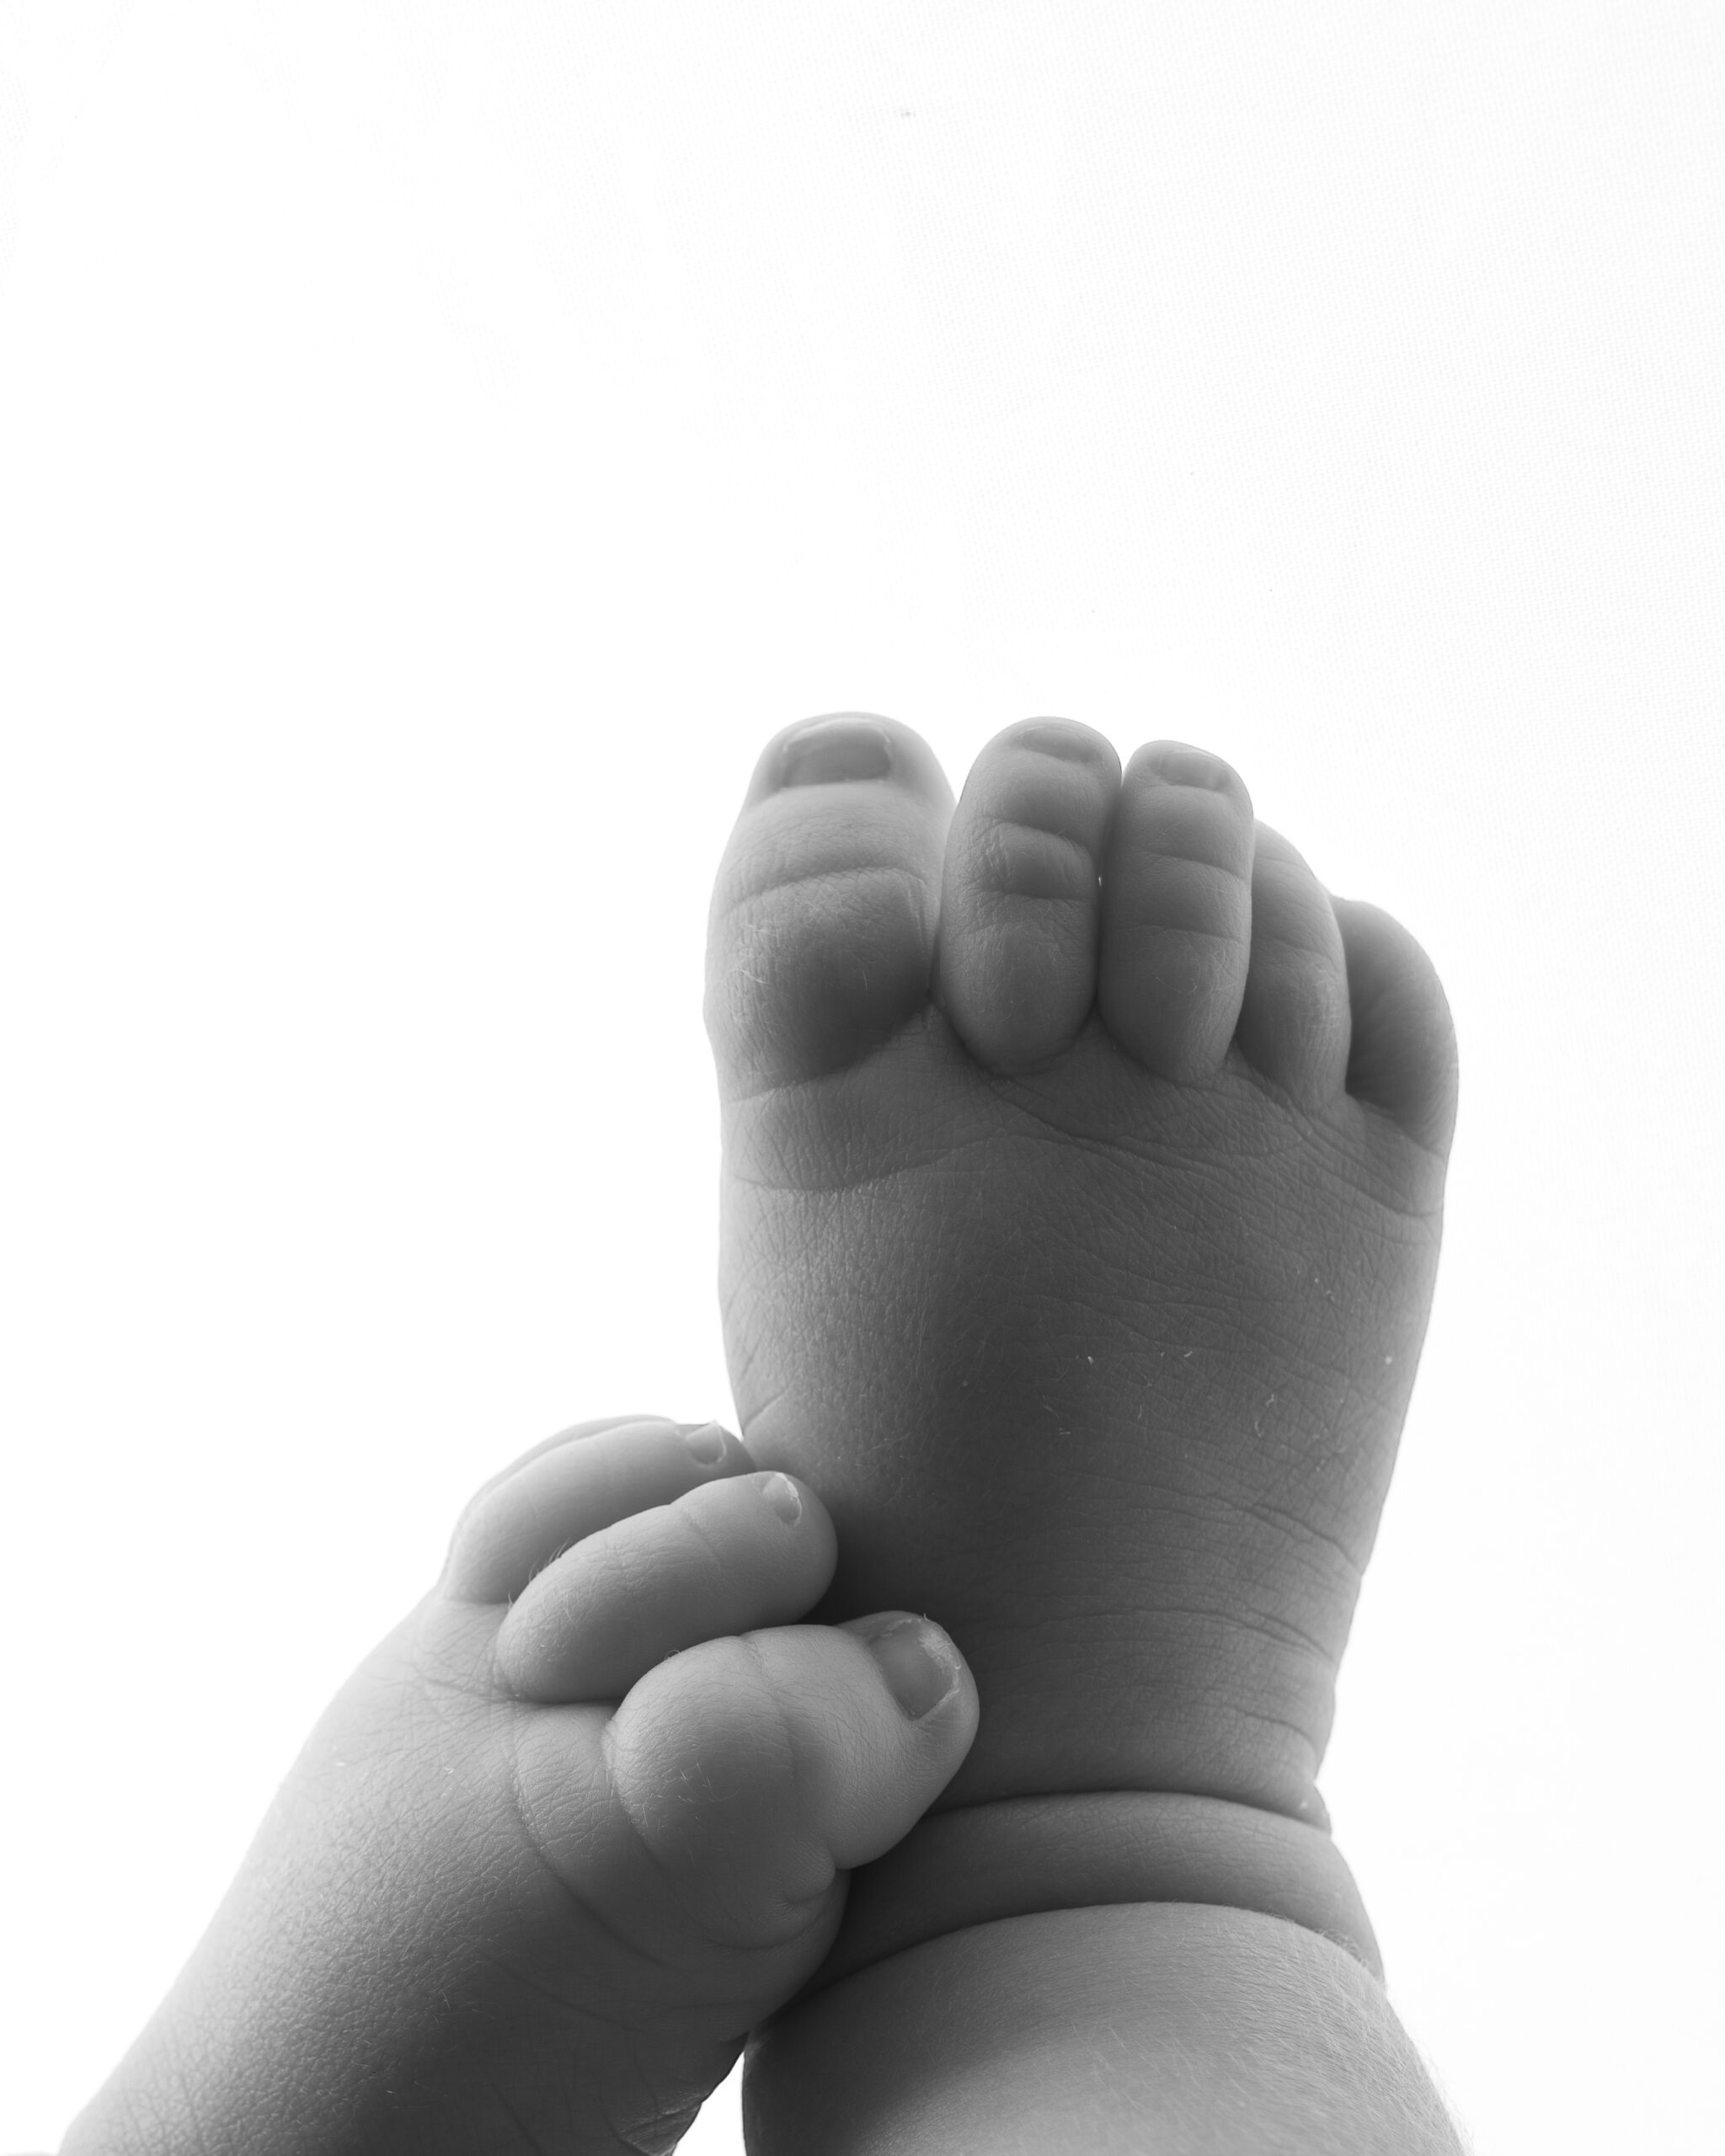 Newborn baby feet